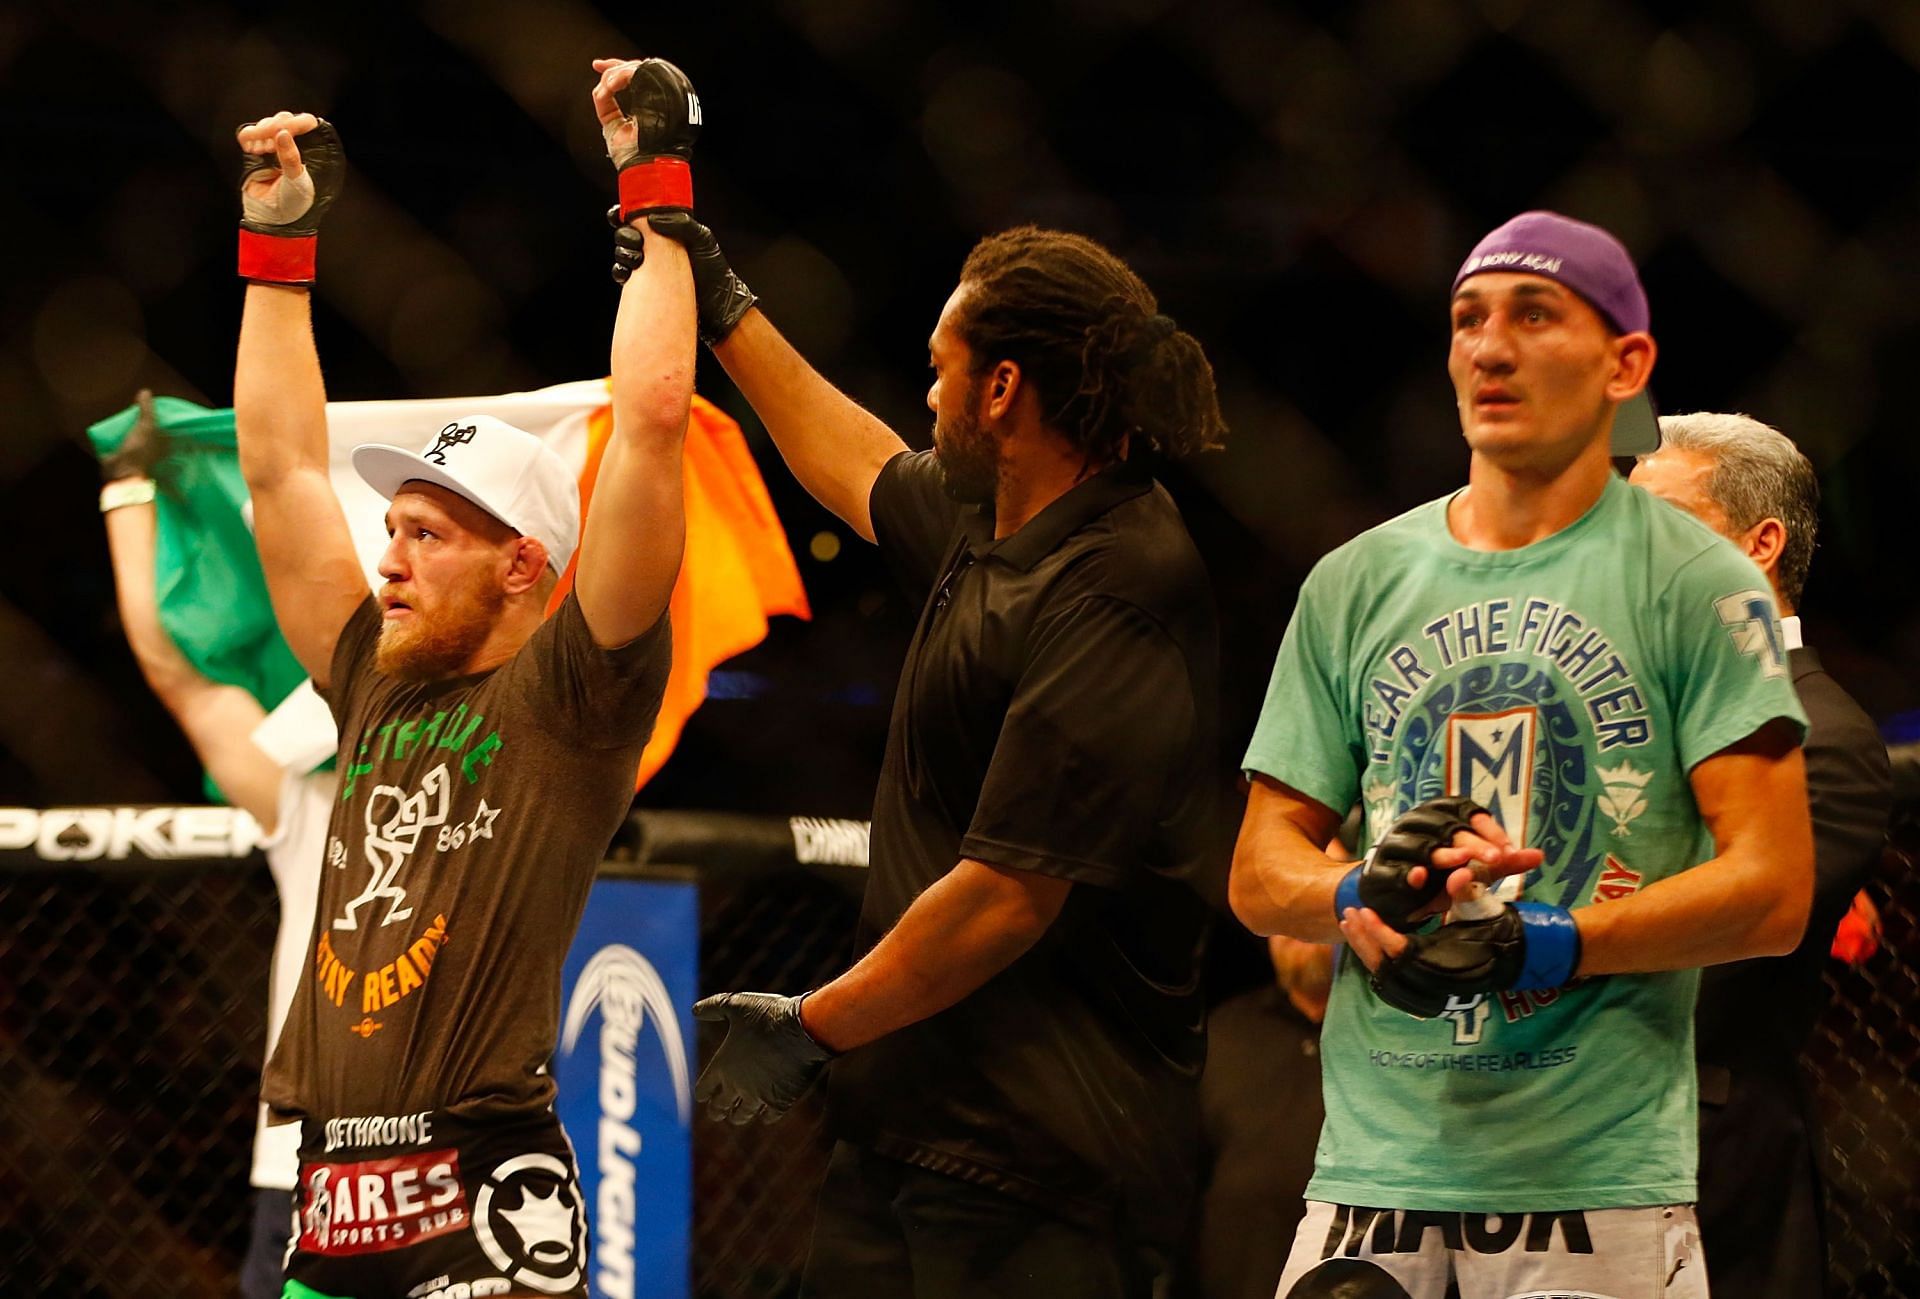 UFC Fight Night: Conor McGregor vs Max Holloway